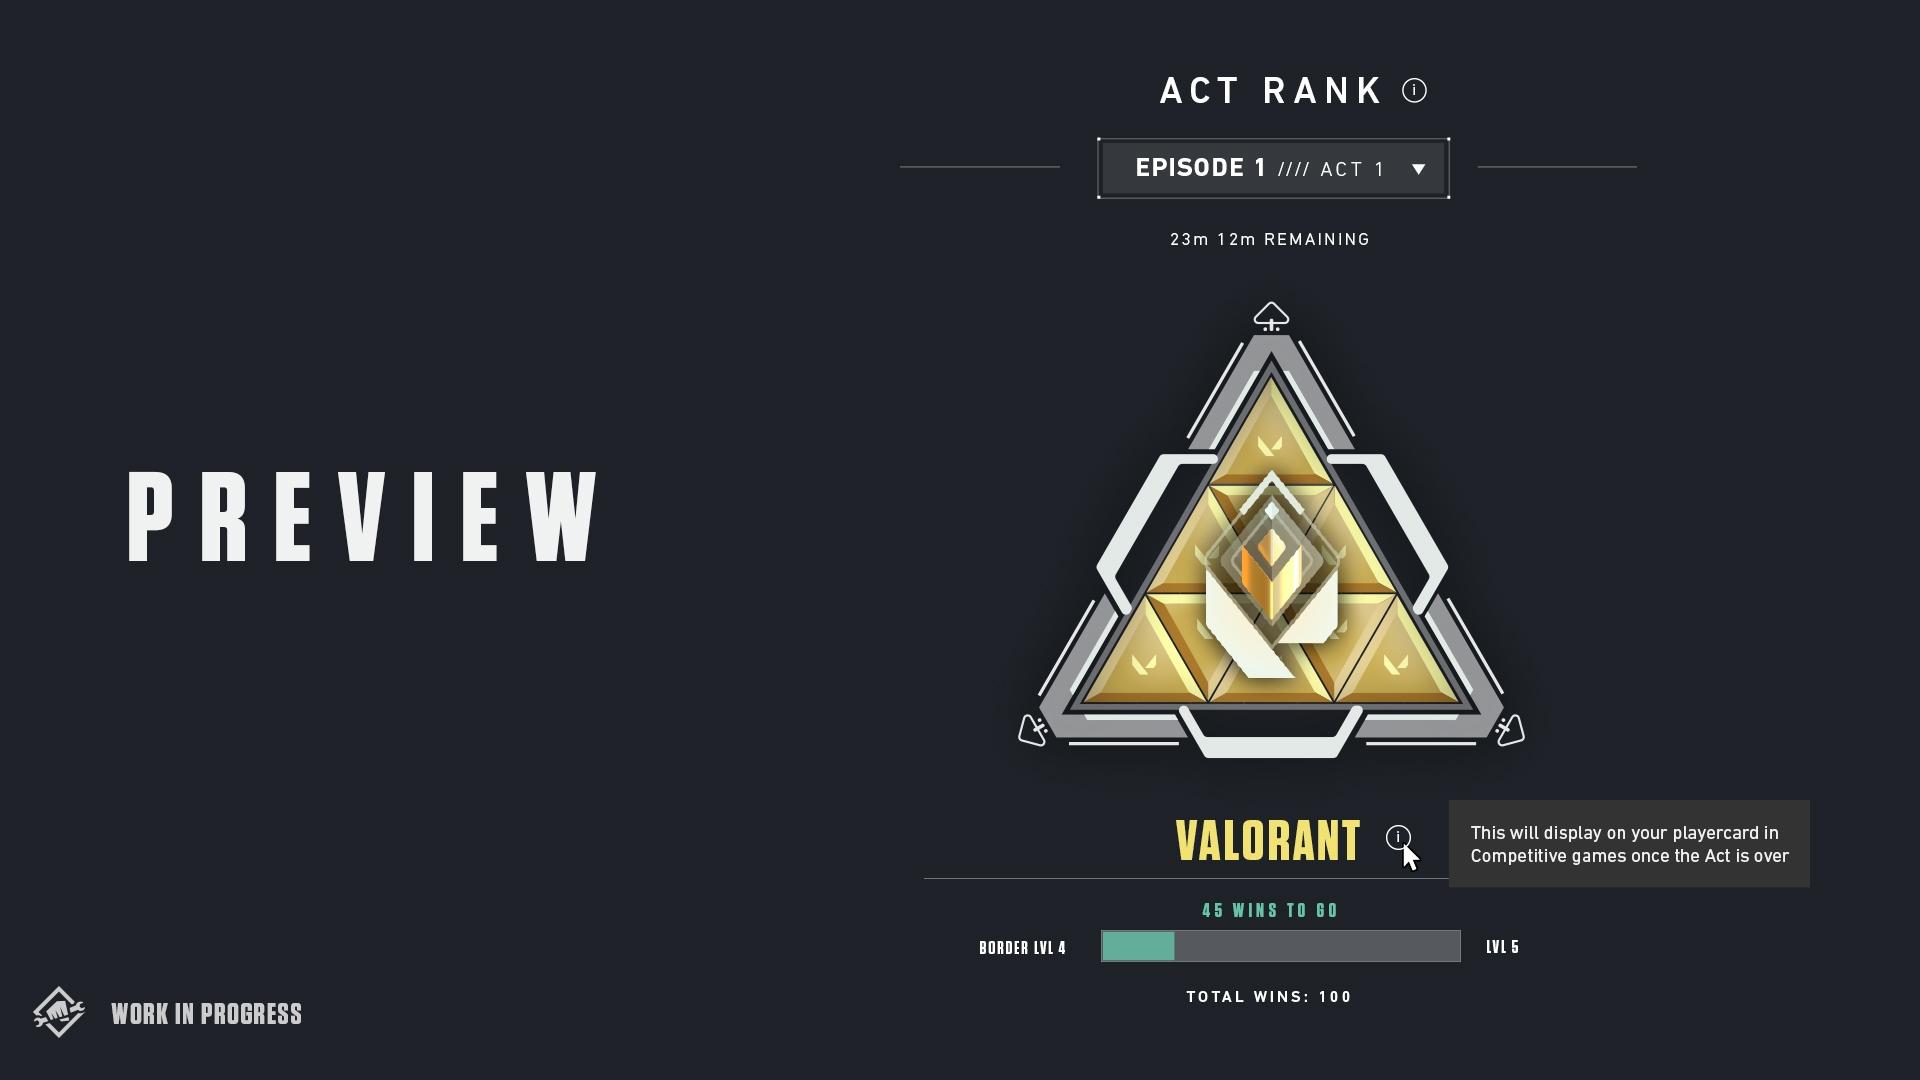 Valorant's act rank badge